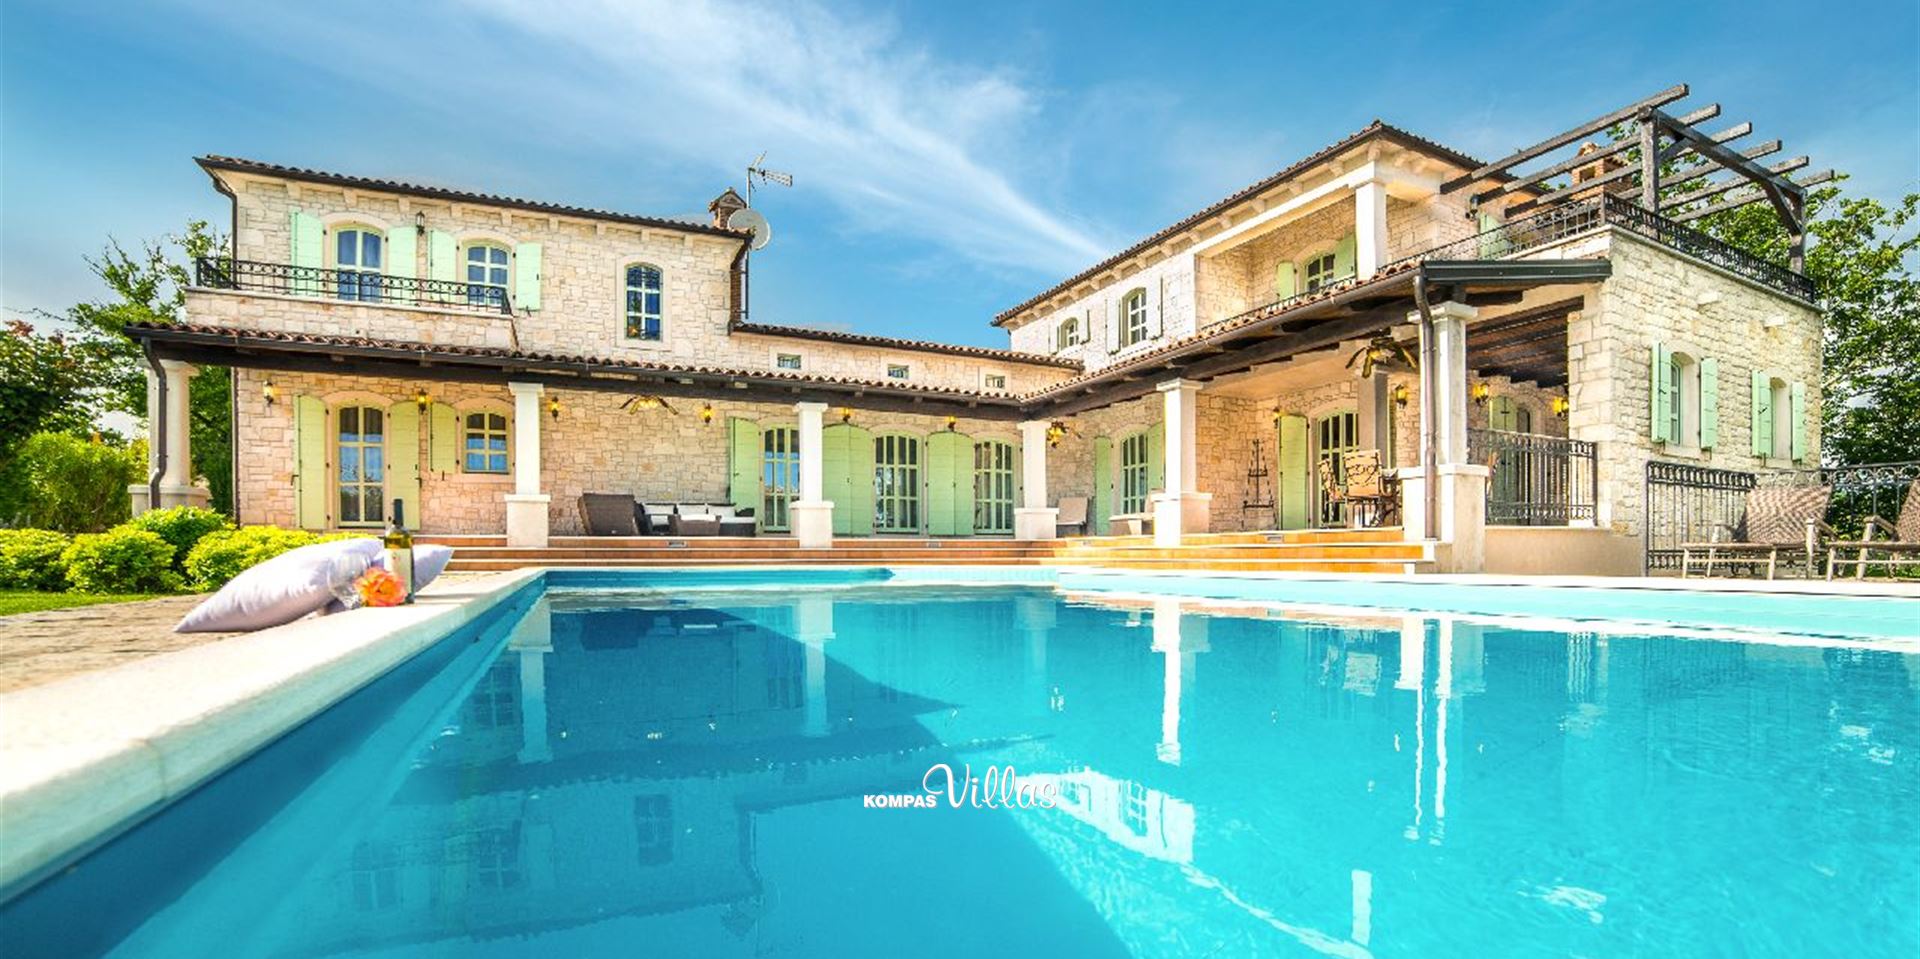 Villa Romana: una hermosa casa de campo en Lloret de mar - Club Villamar